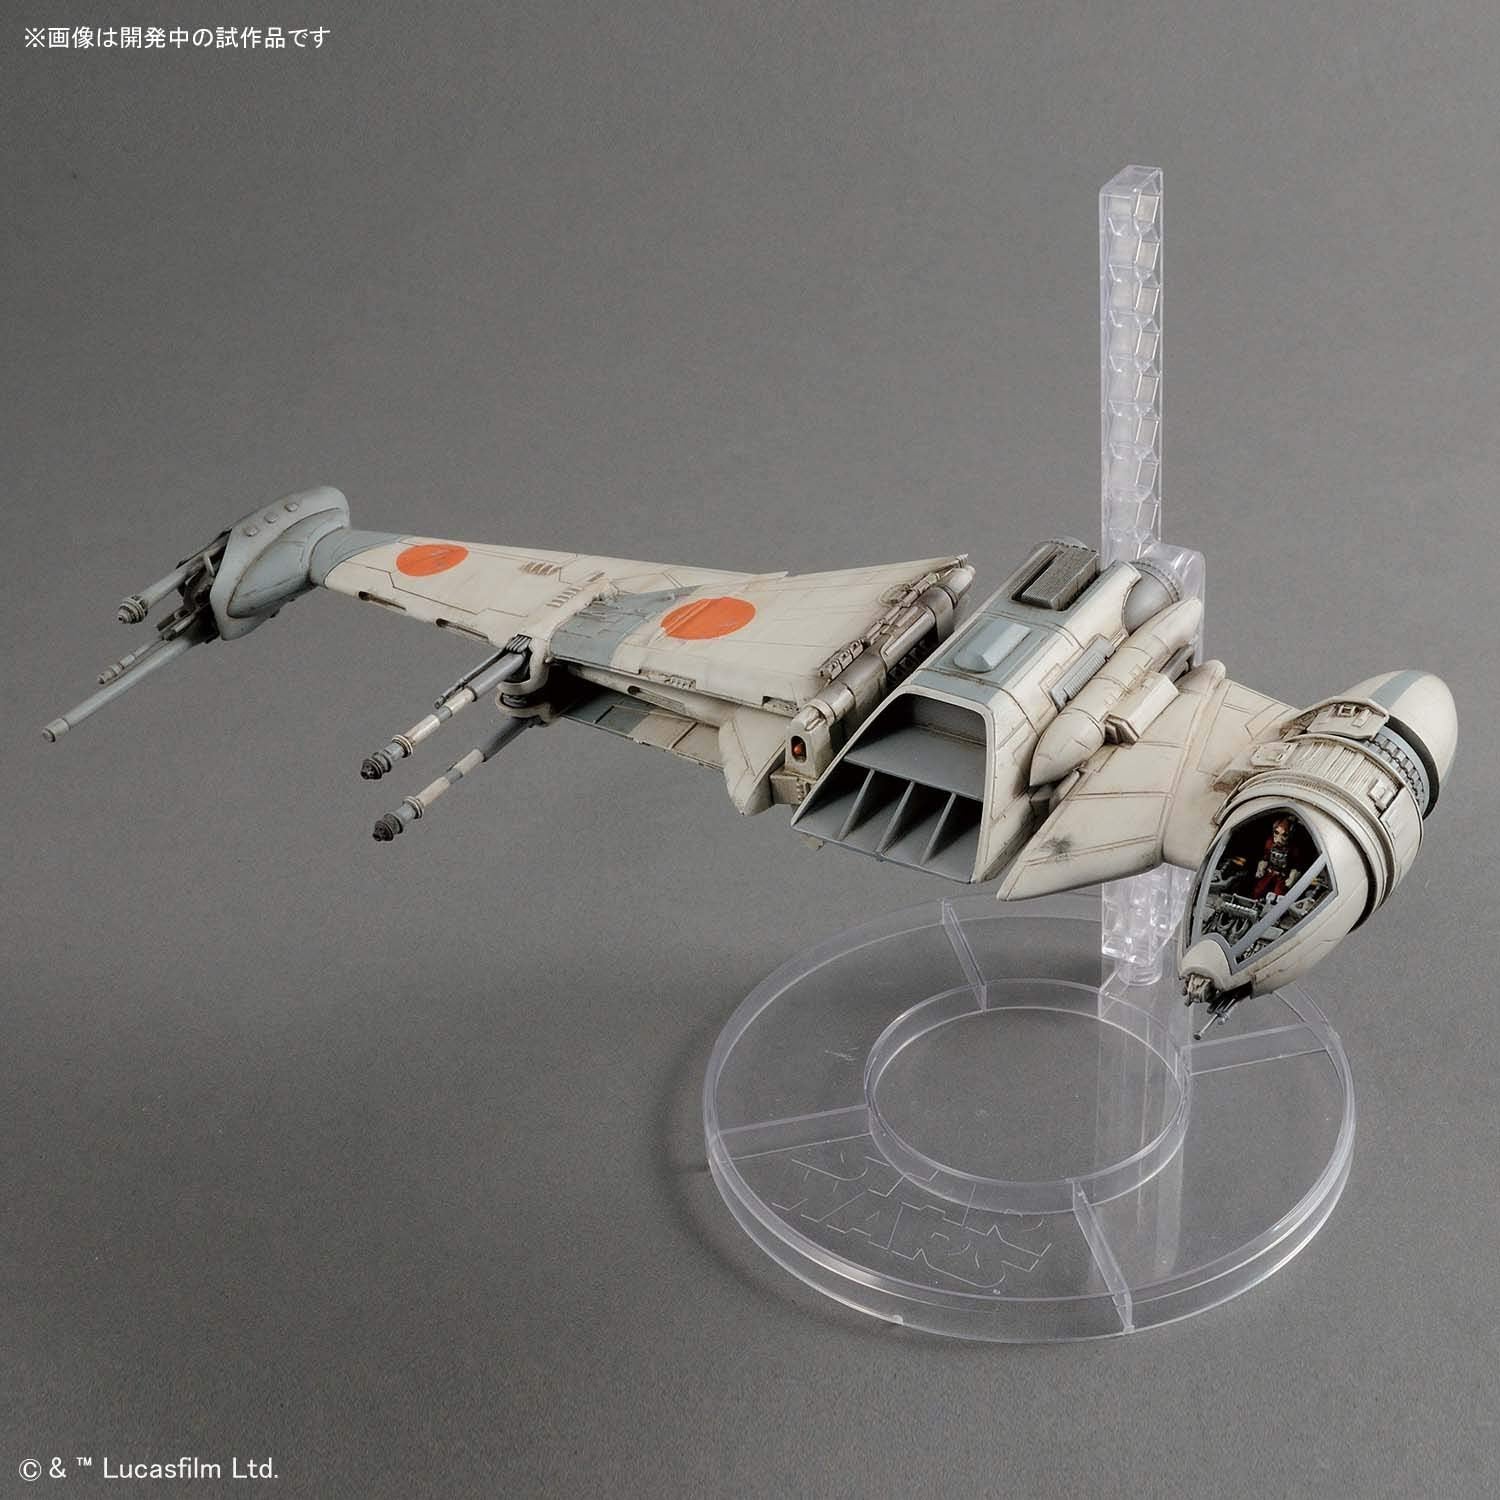 Star Wars - B-Wing Fighter 1/72